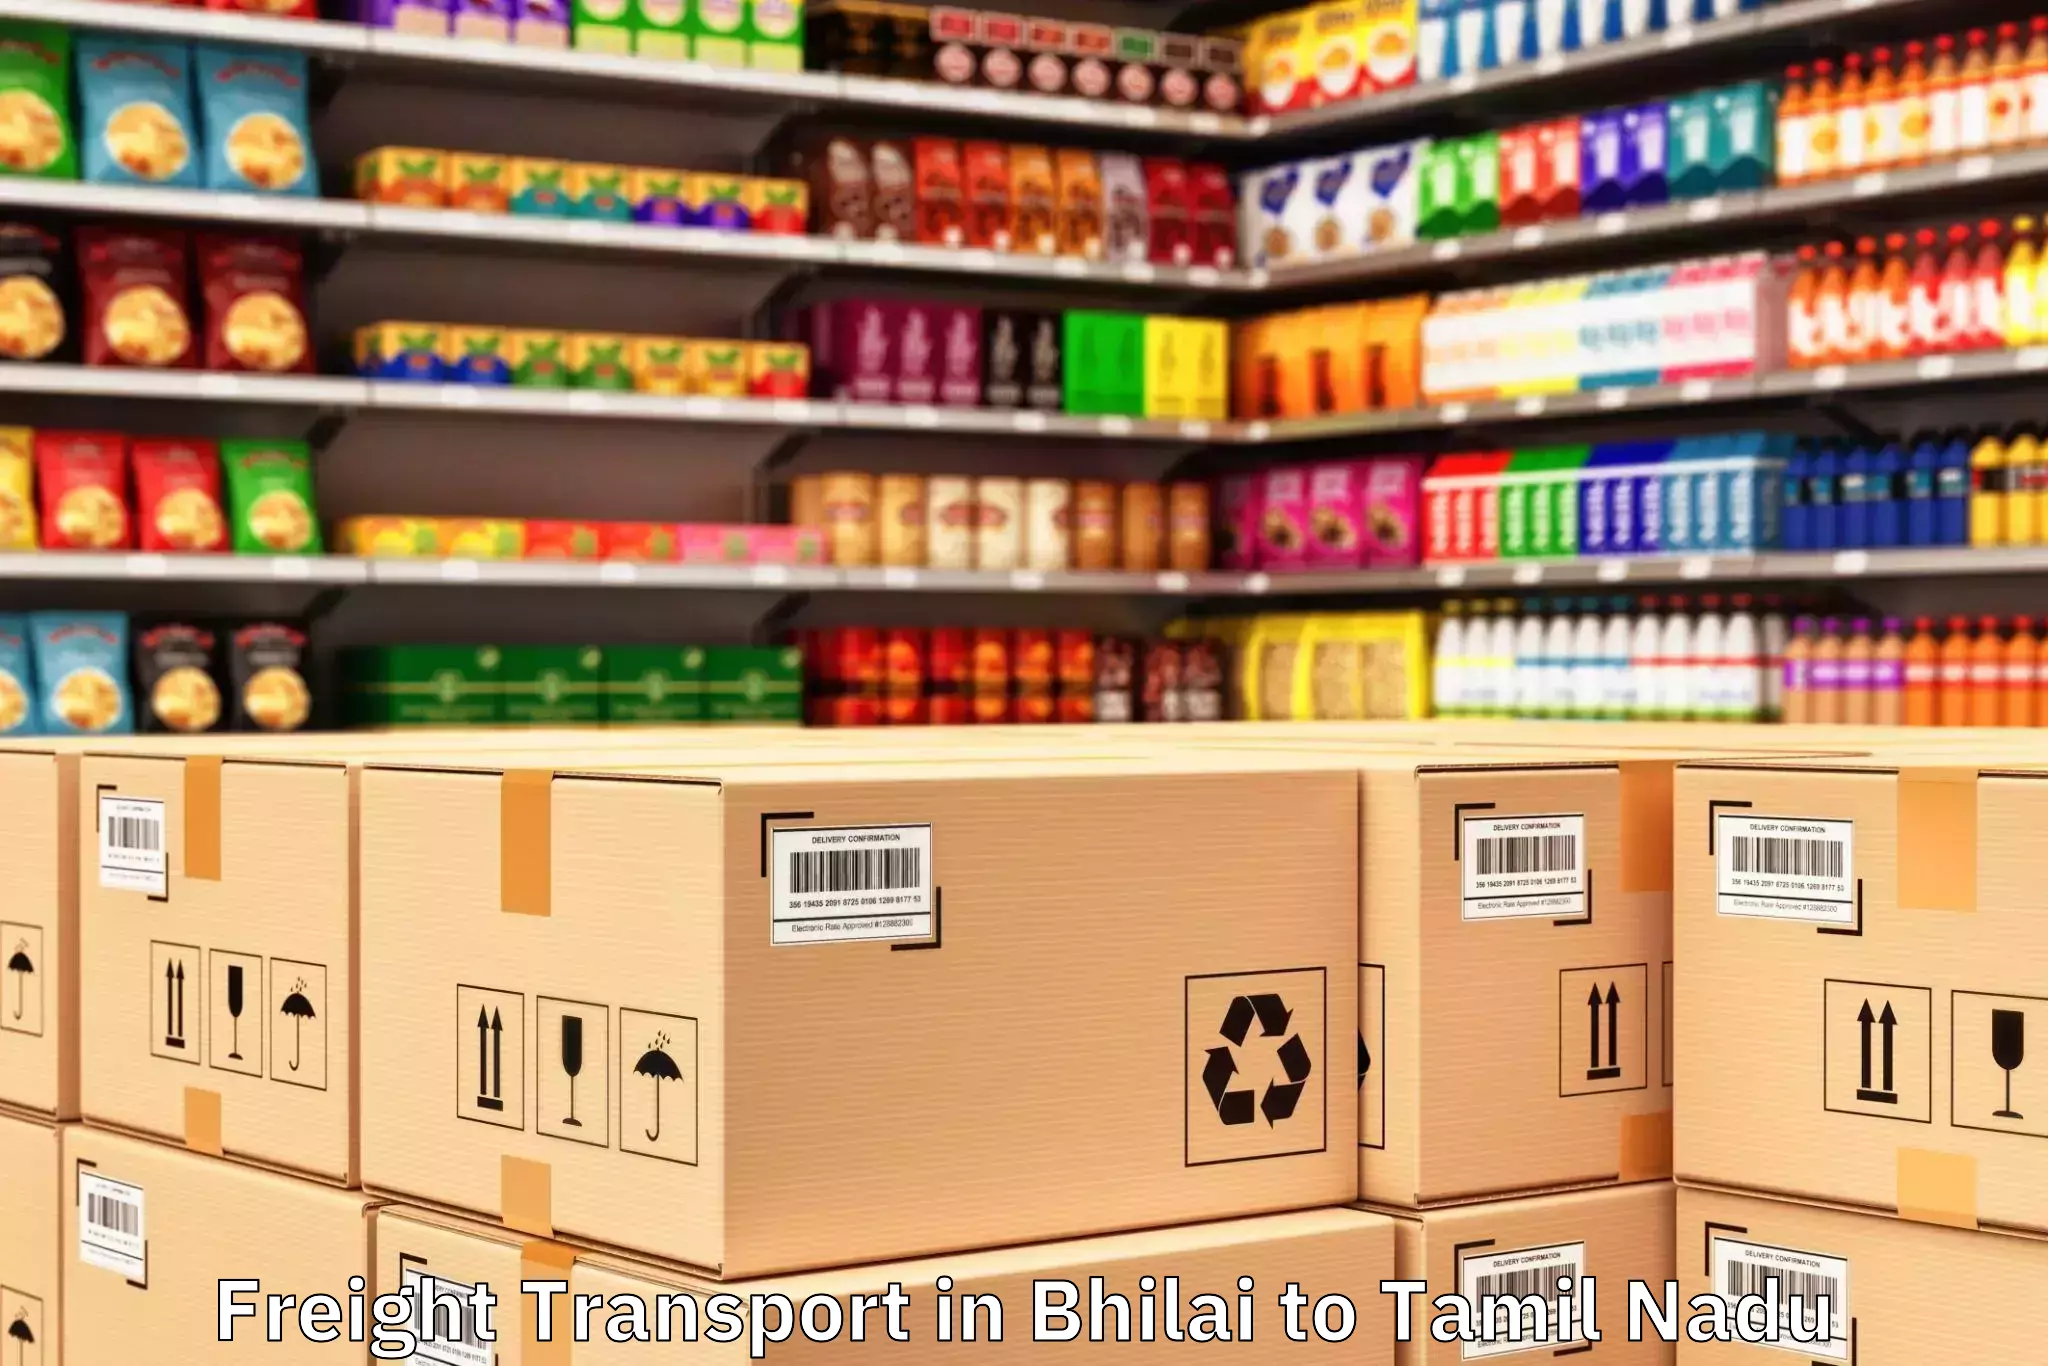 Quality Bhilai to Tirupattur Freight Transport